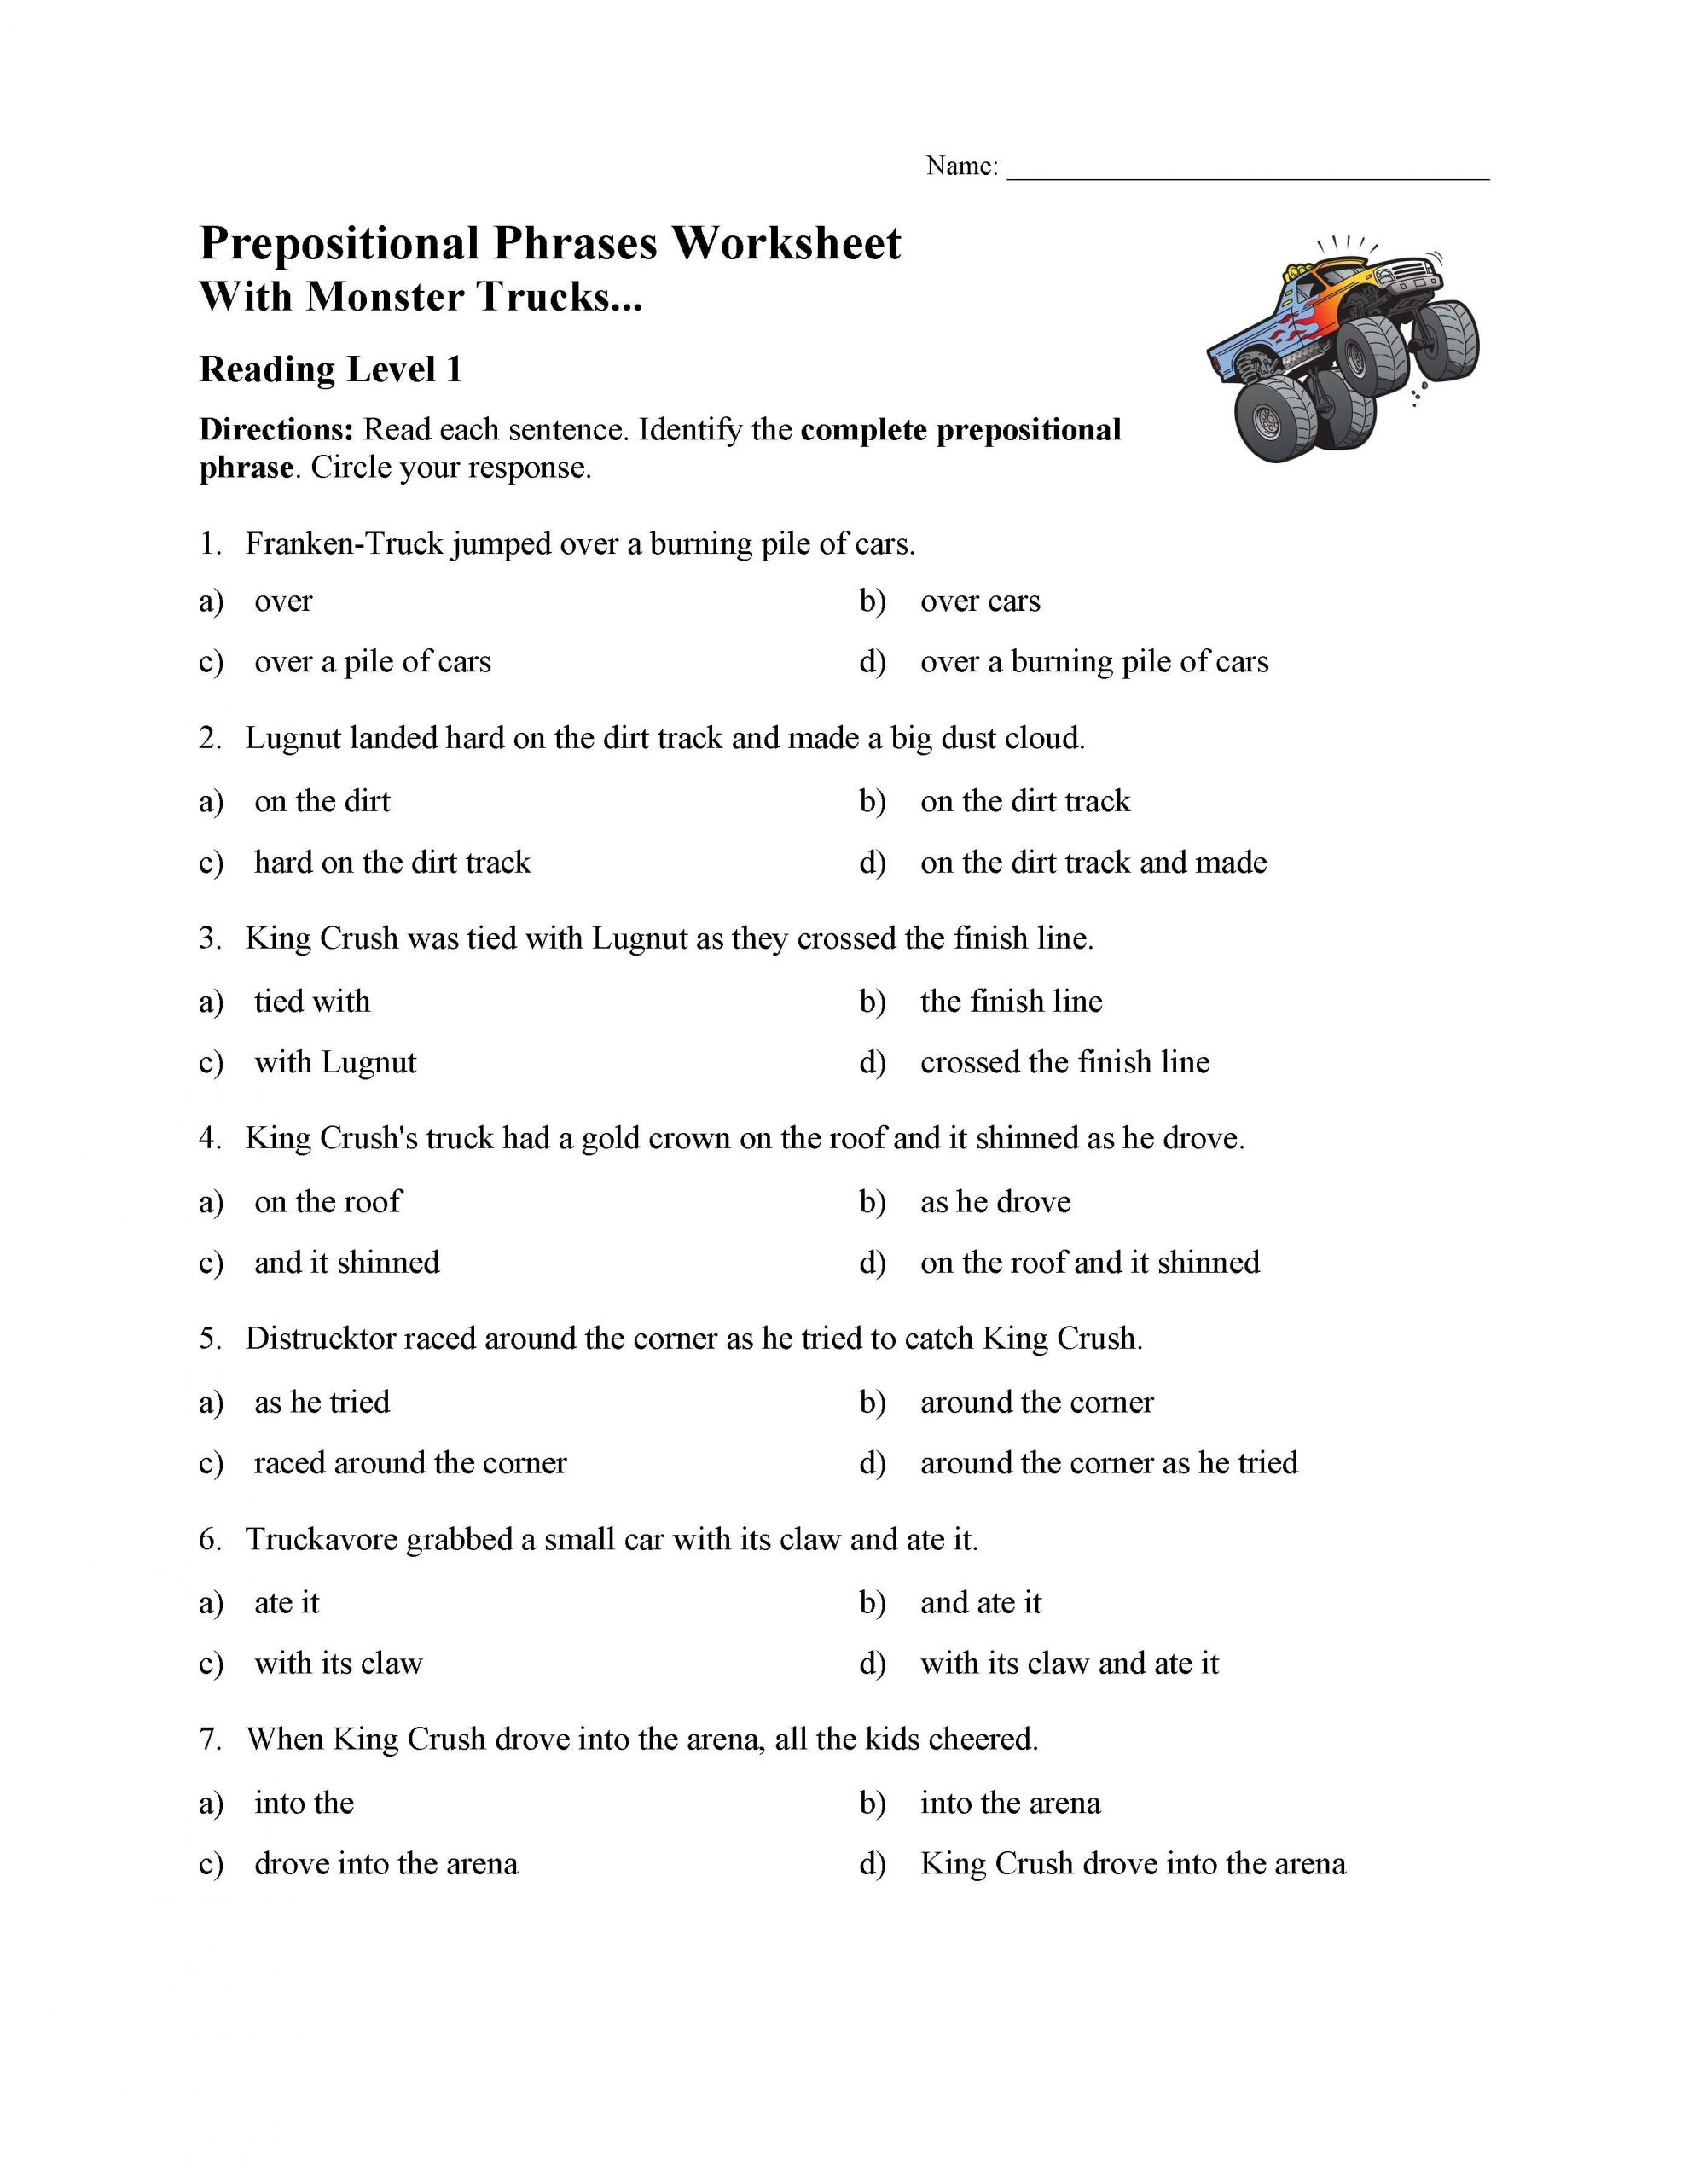 preposition-sentences-worksheet-pdf-sentenceworksheets